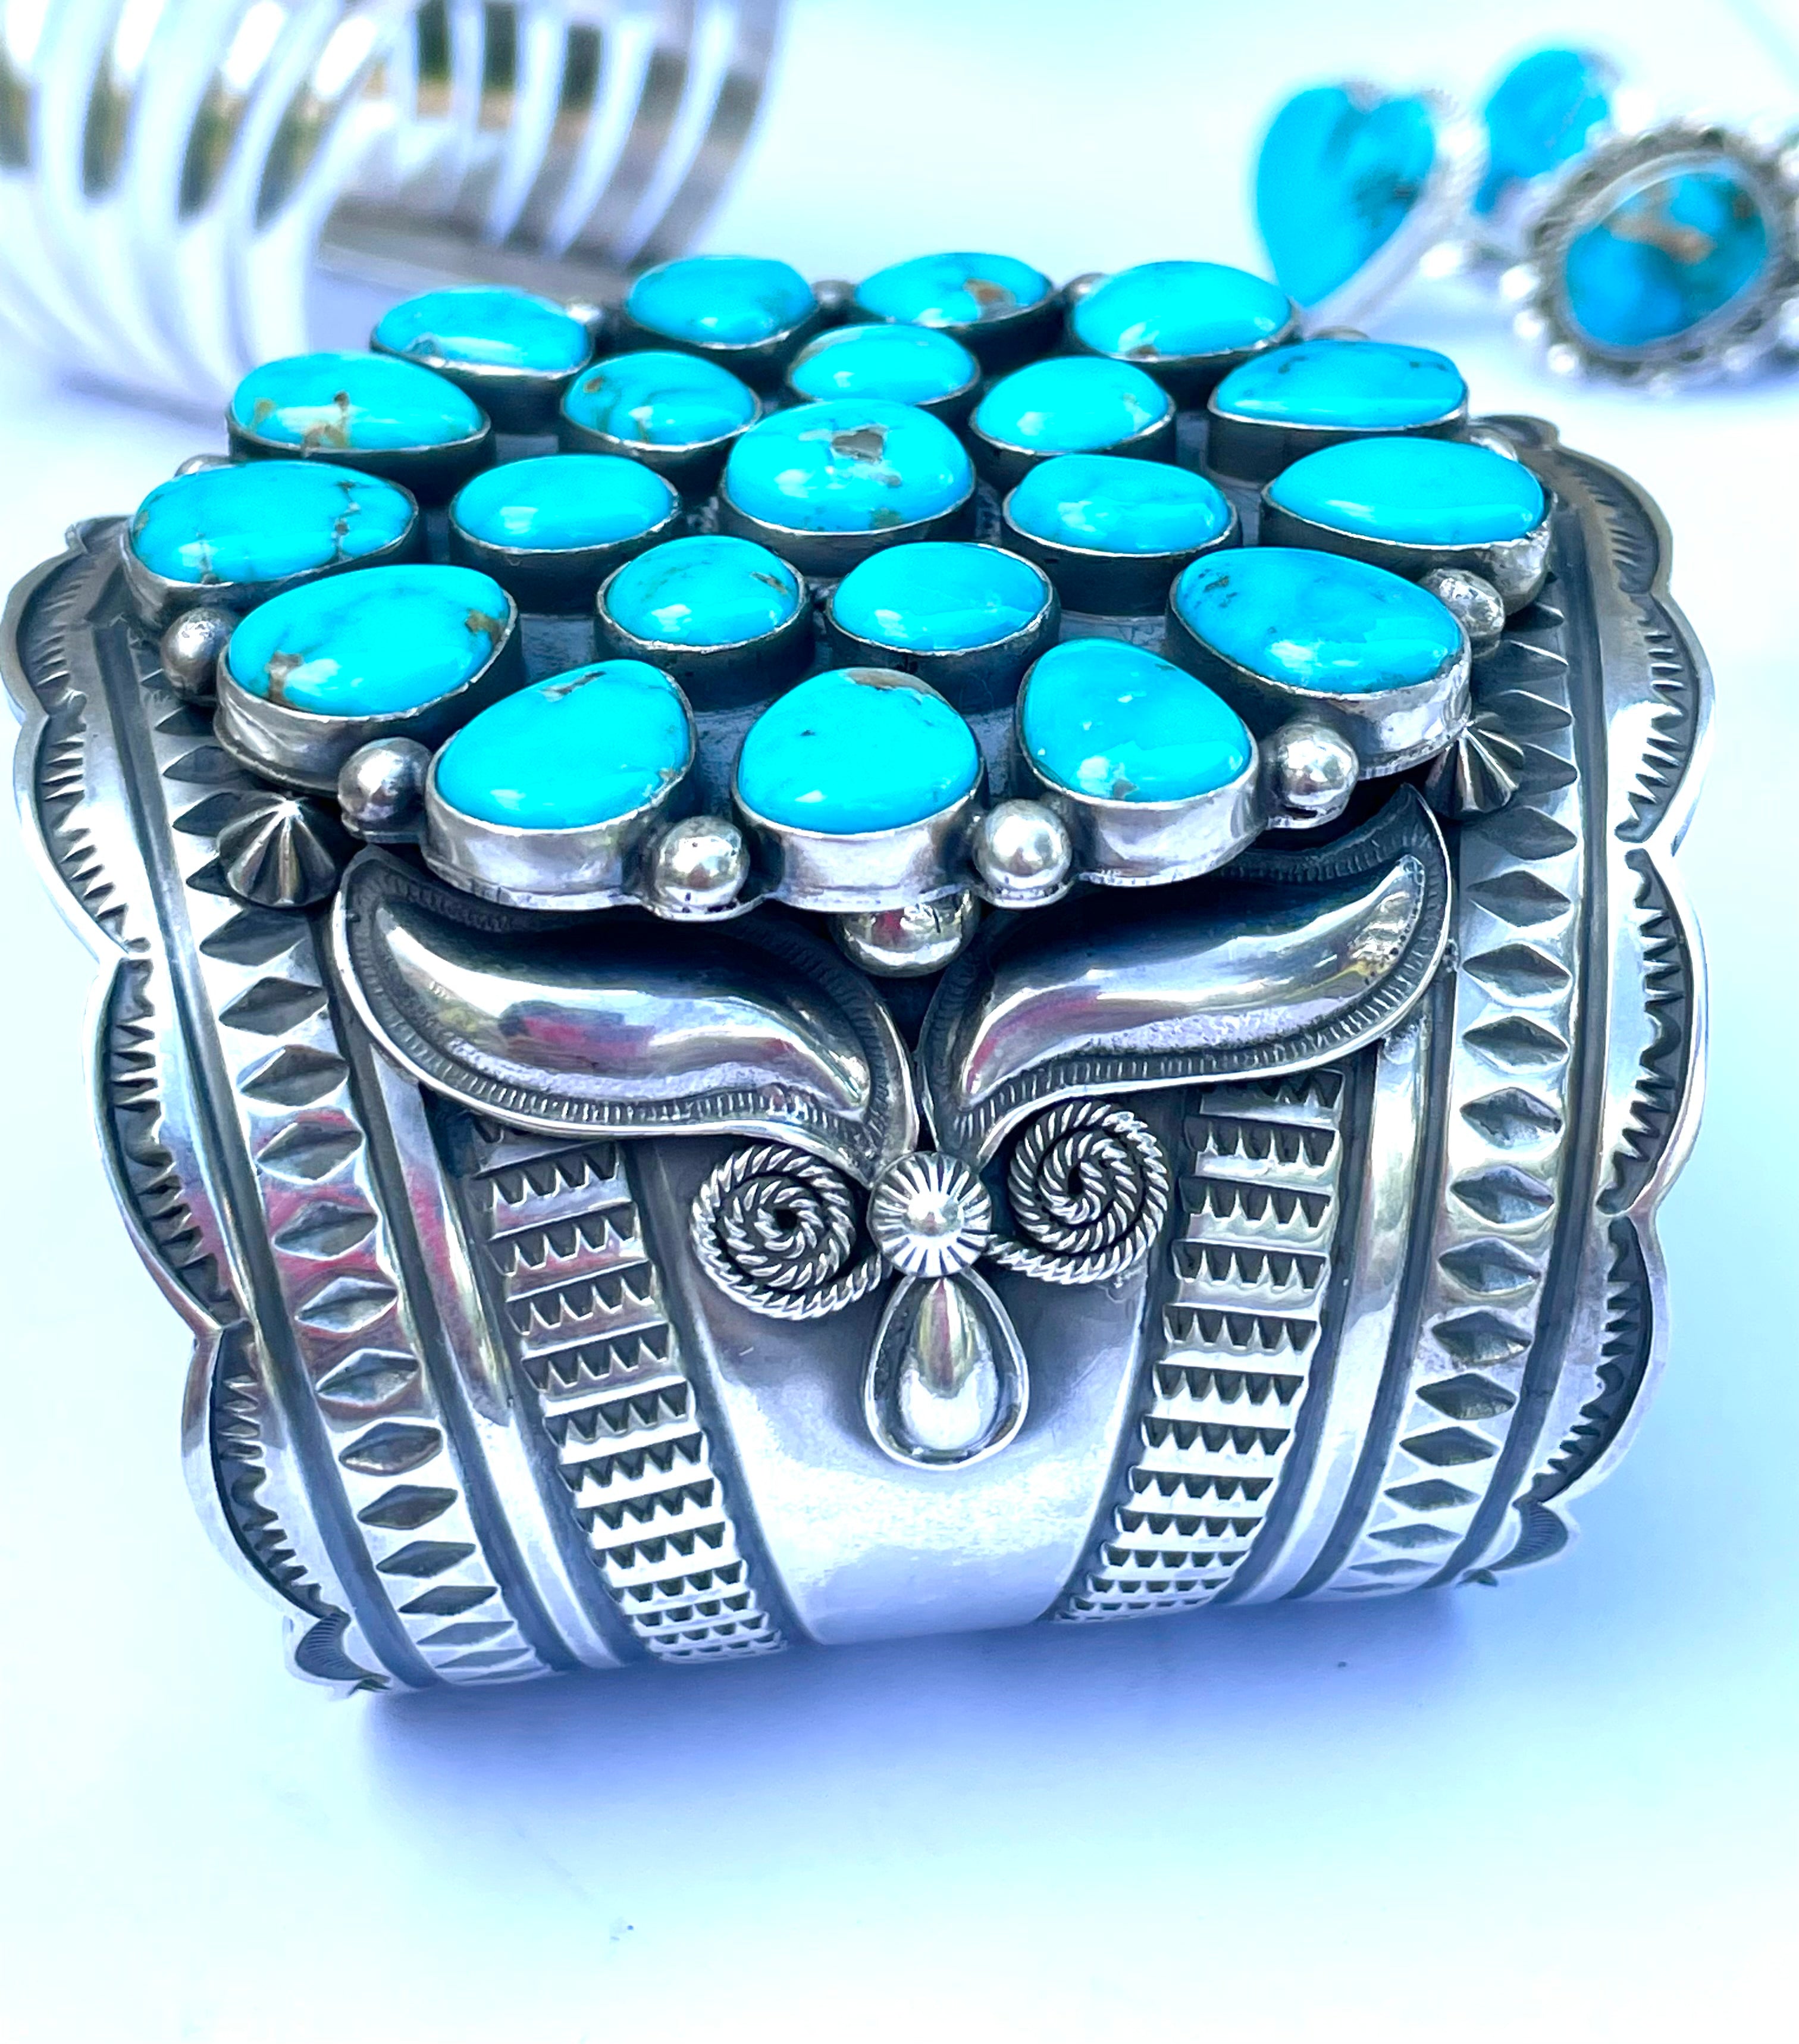 Navajo large turquoise cluster bracelet sleeping beauty